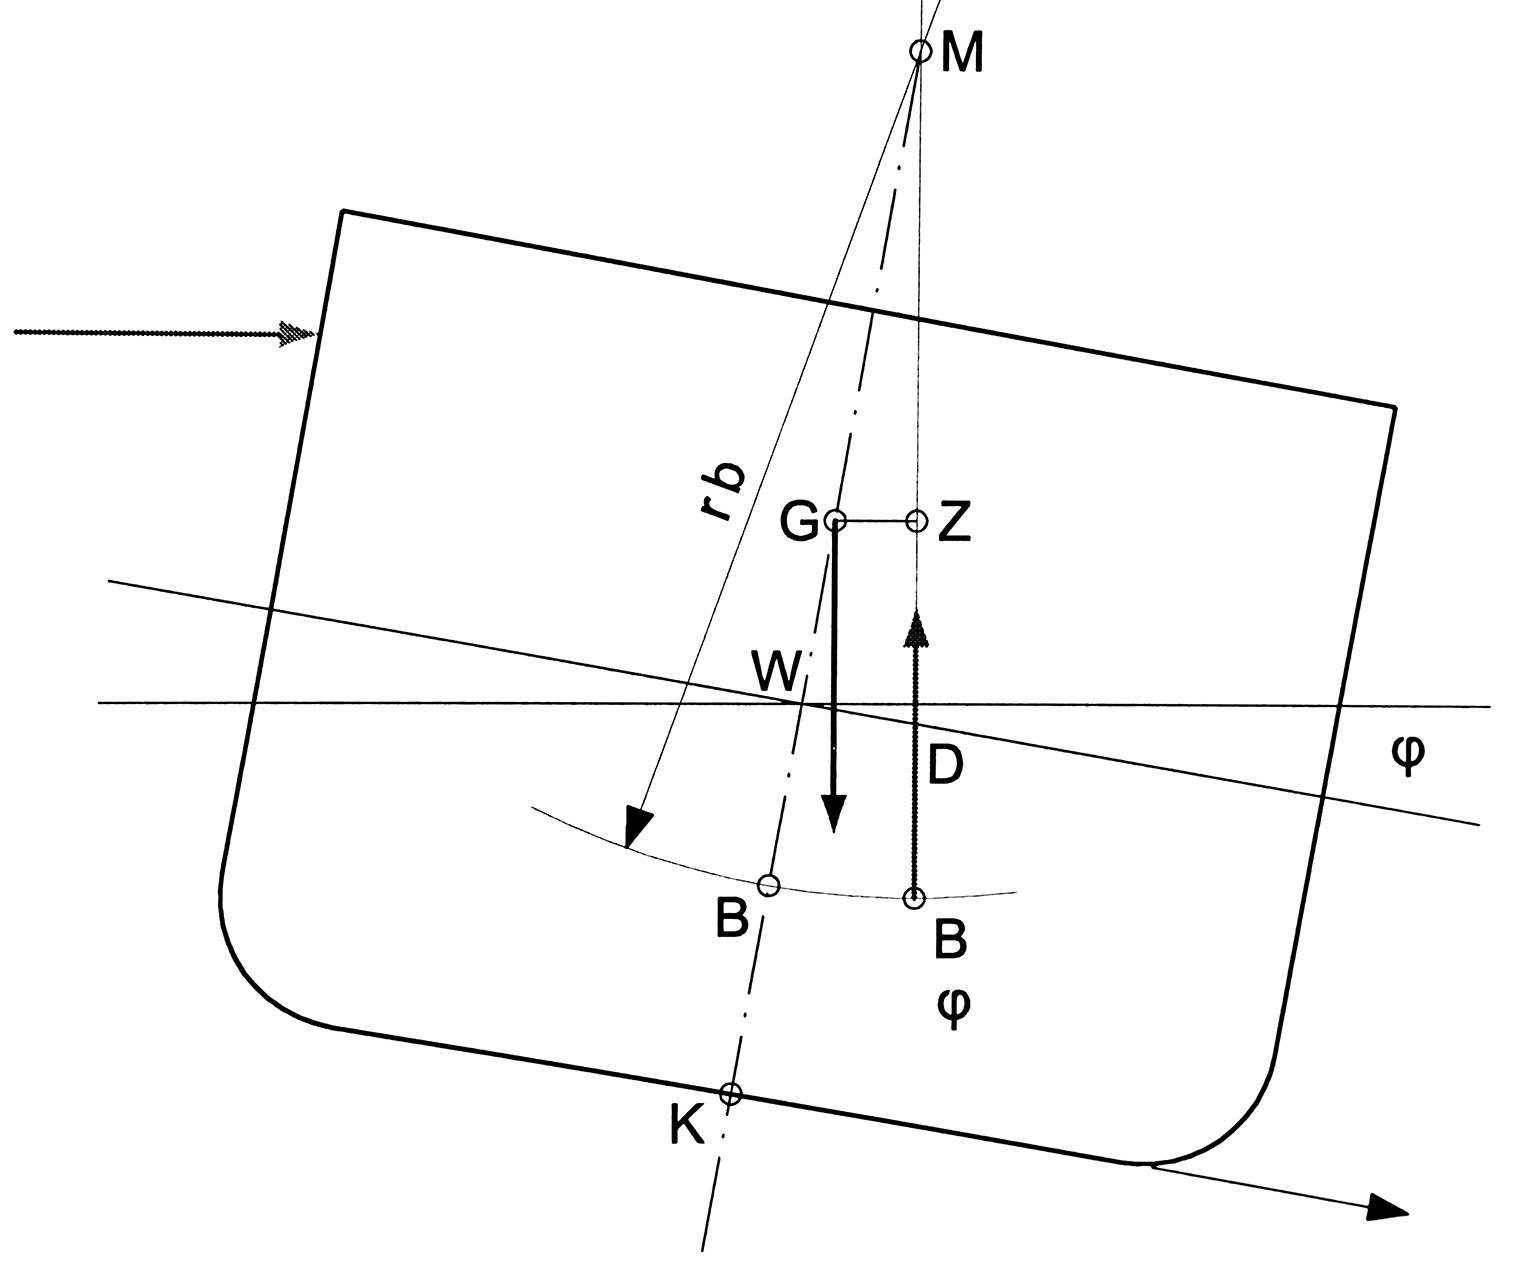 Metacentre M (initial transverse metacentre)